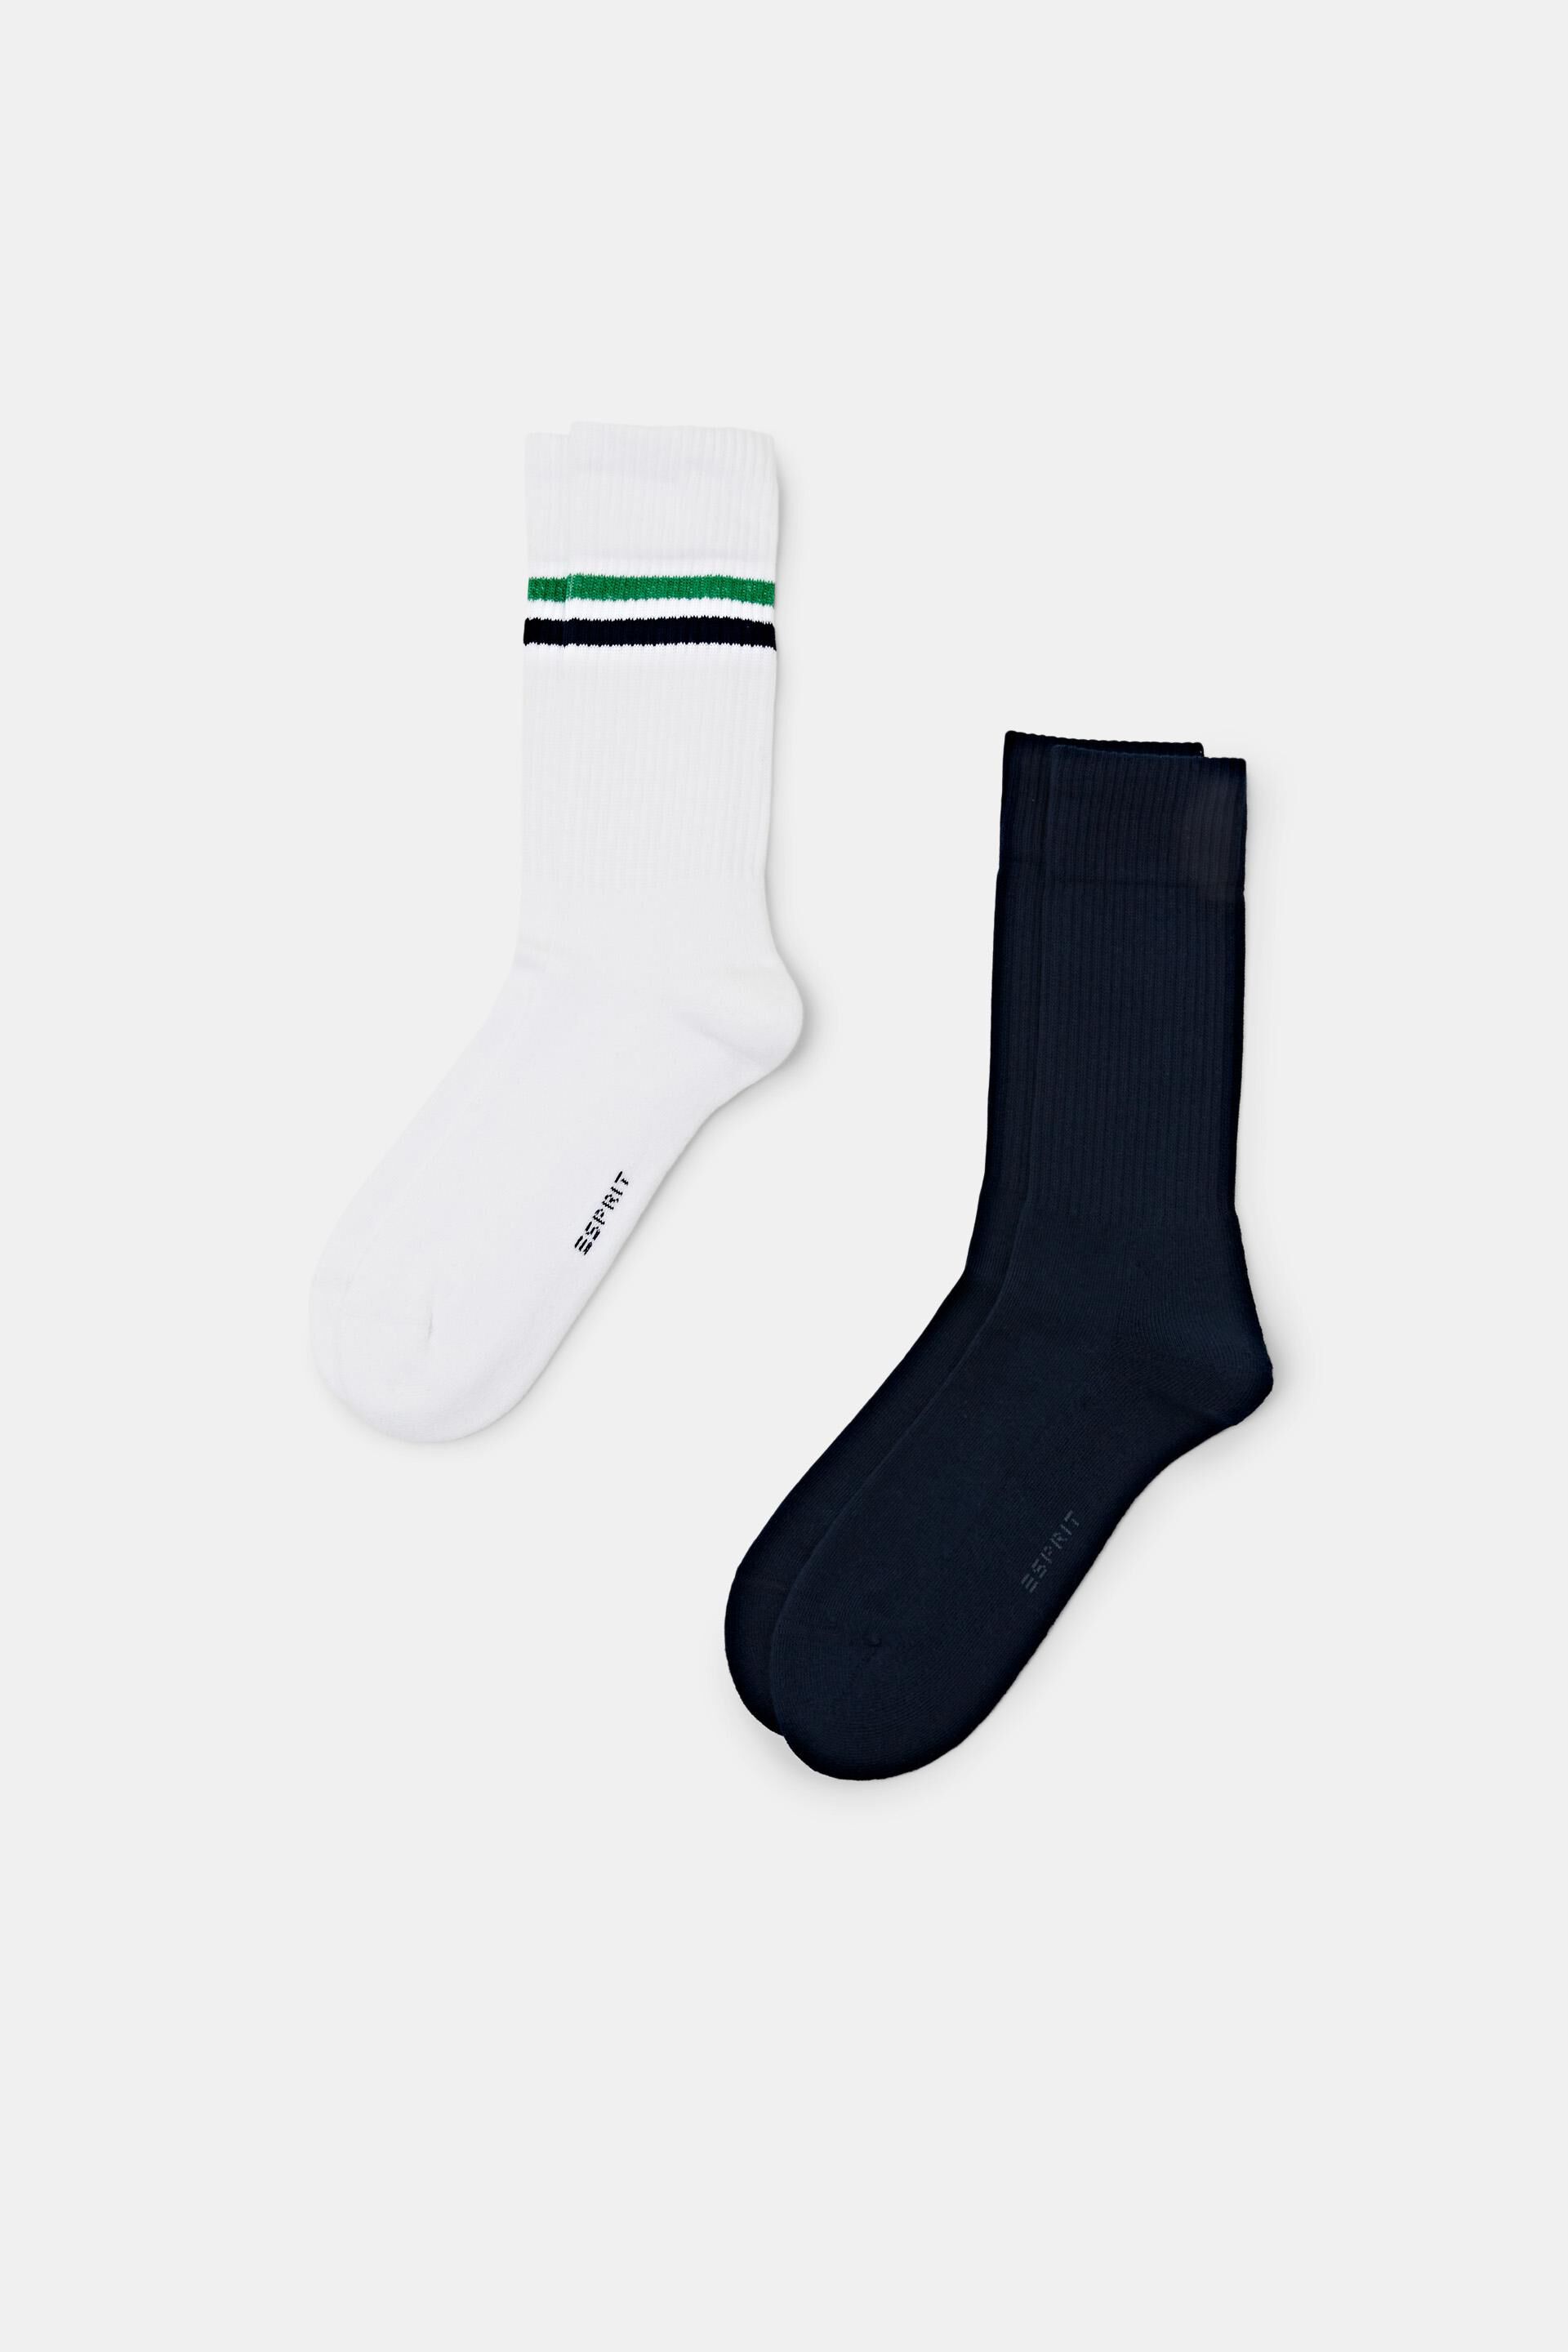 Esprit 2-pack socks, cotton organic of athletic